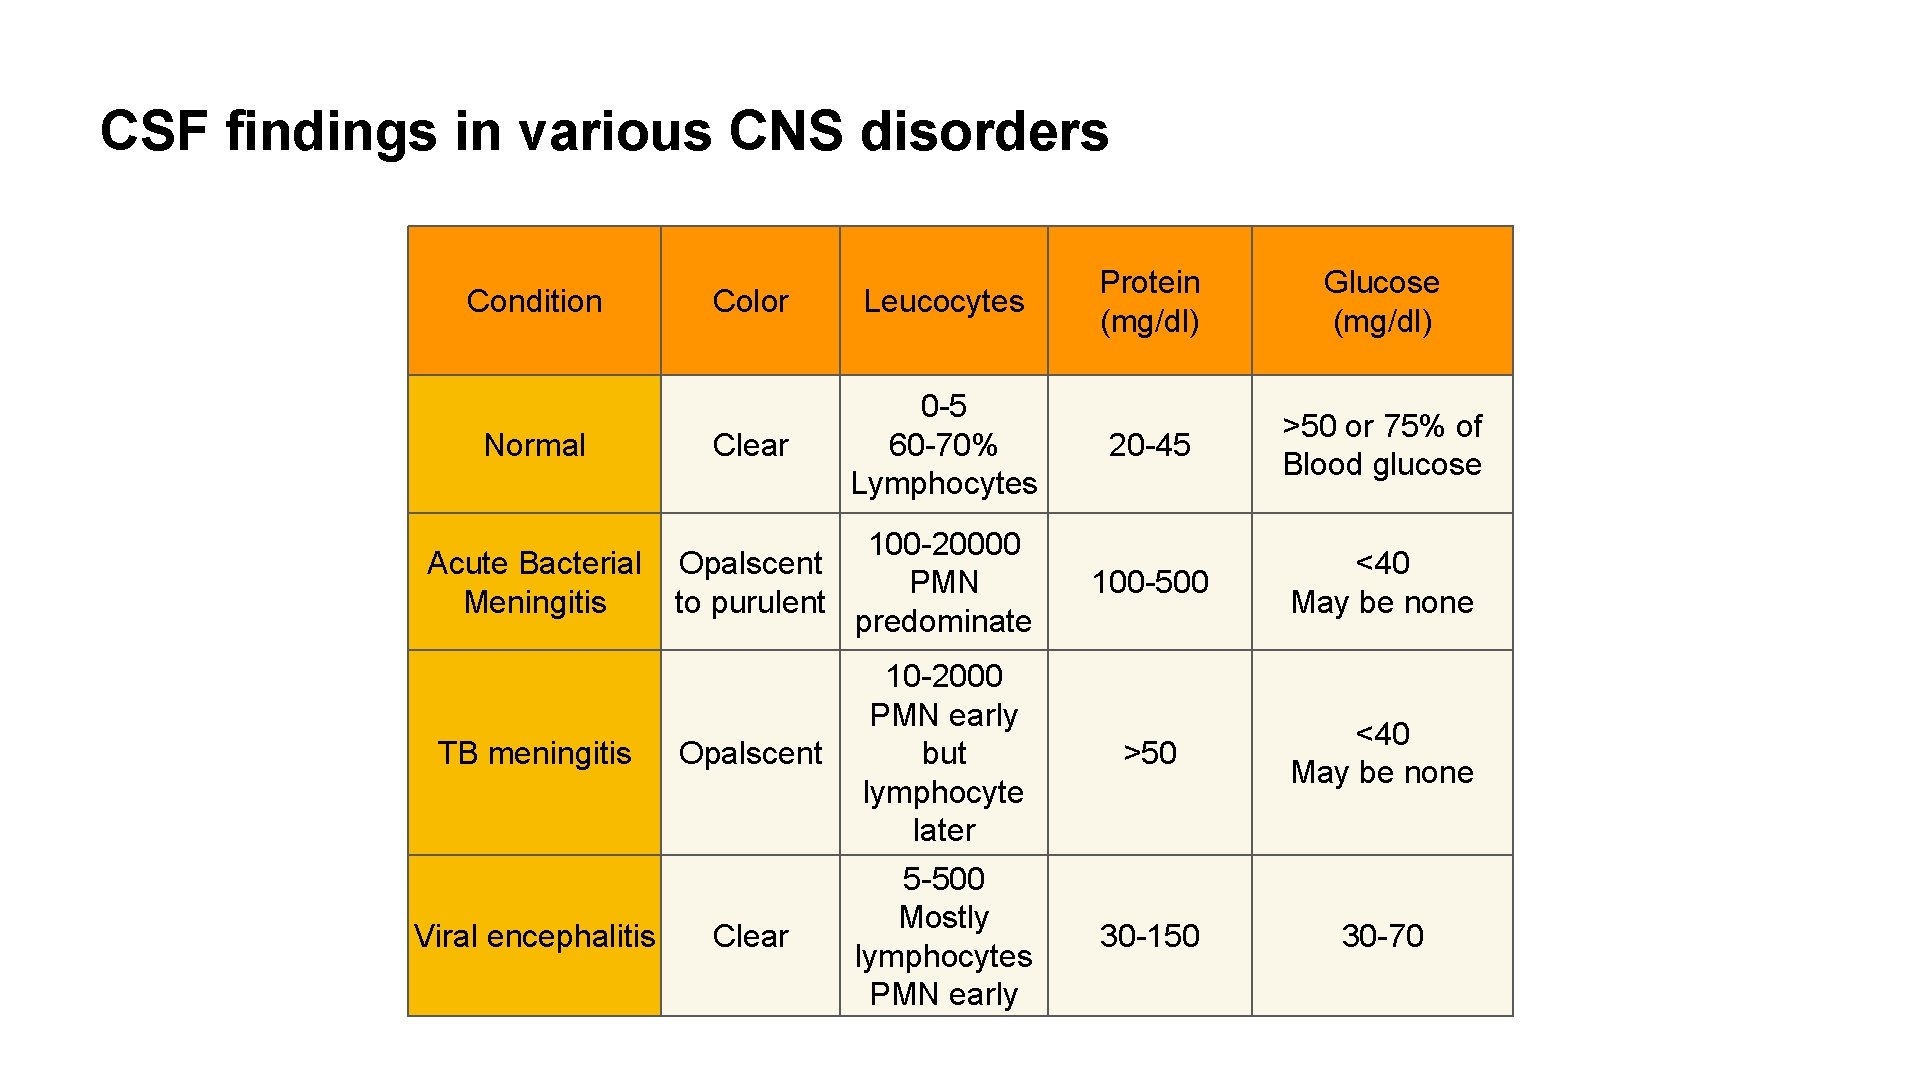 CSF findings in various CNS disorders Condition Normal Acute Bacterial Meningitis TB meningitis Viral